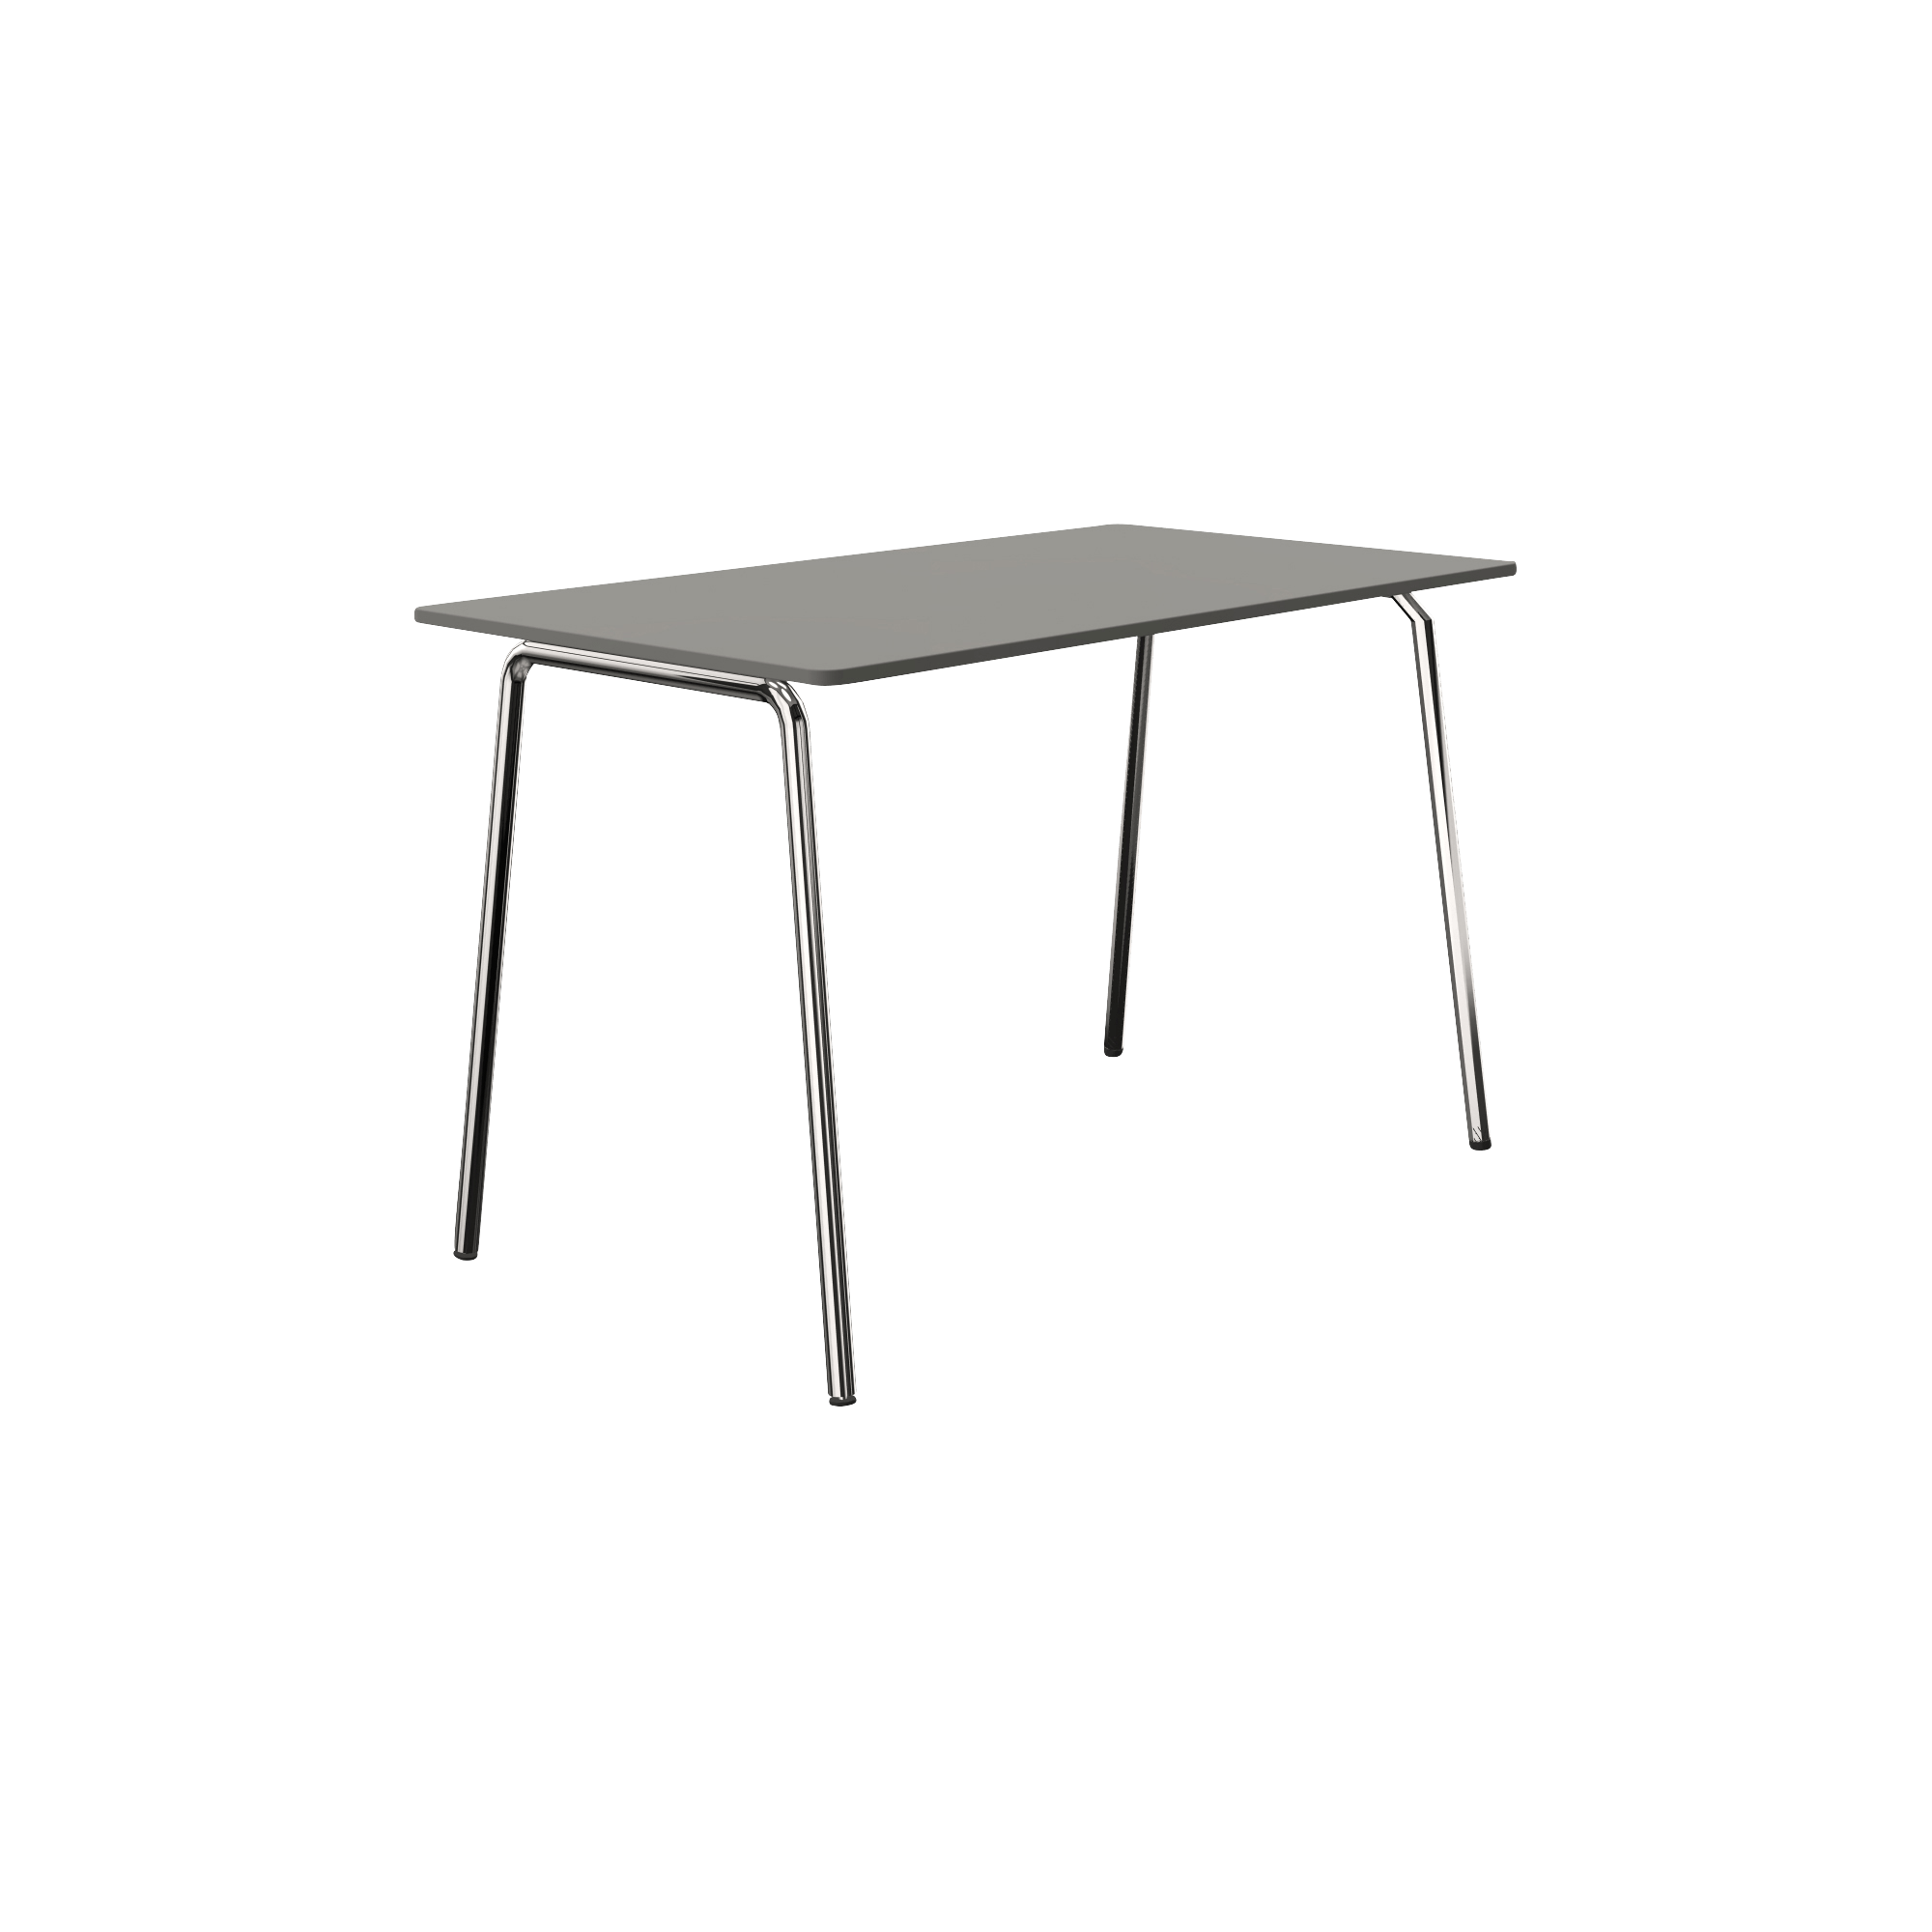 Grey, short rectangular table with 4 chrome legs